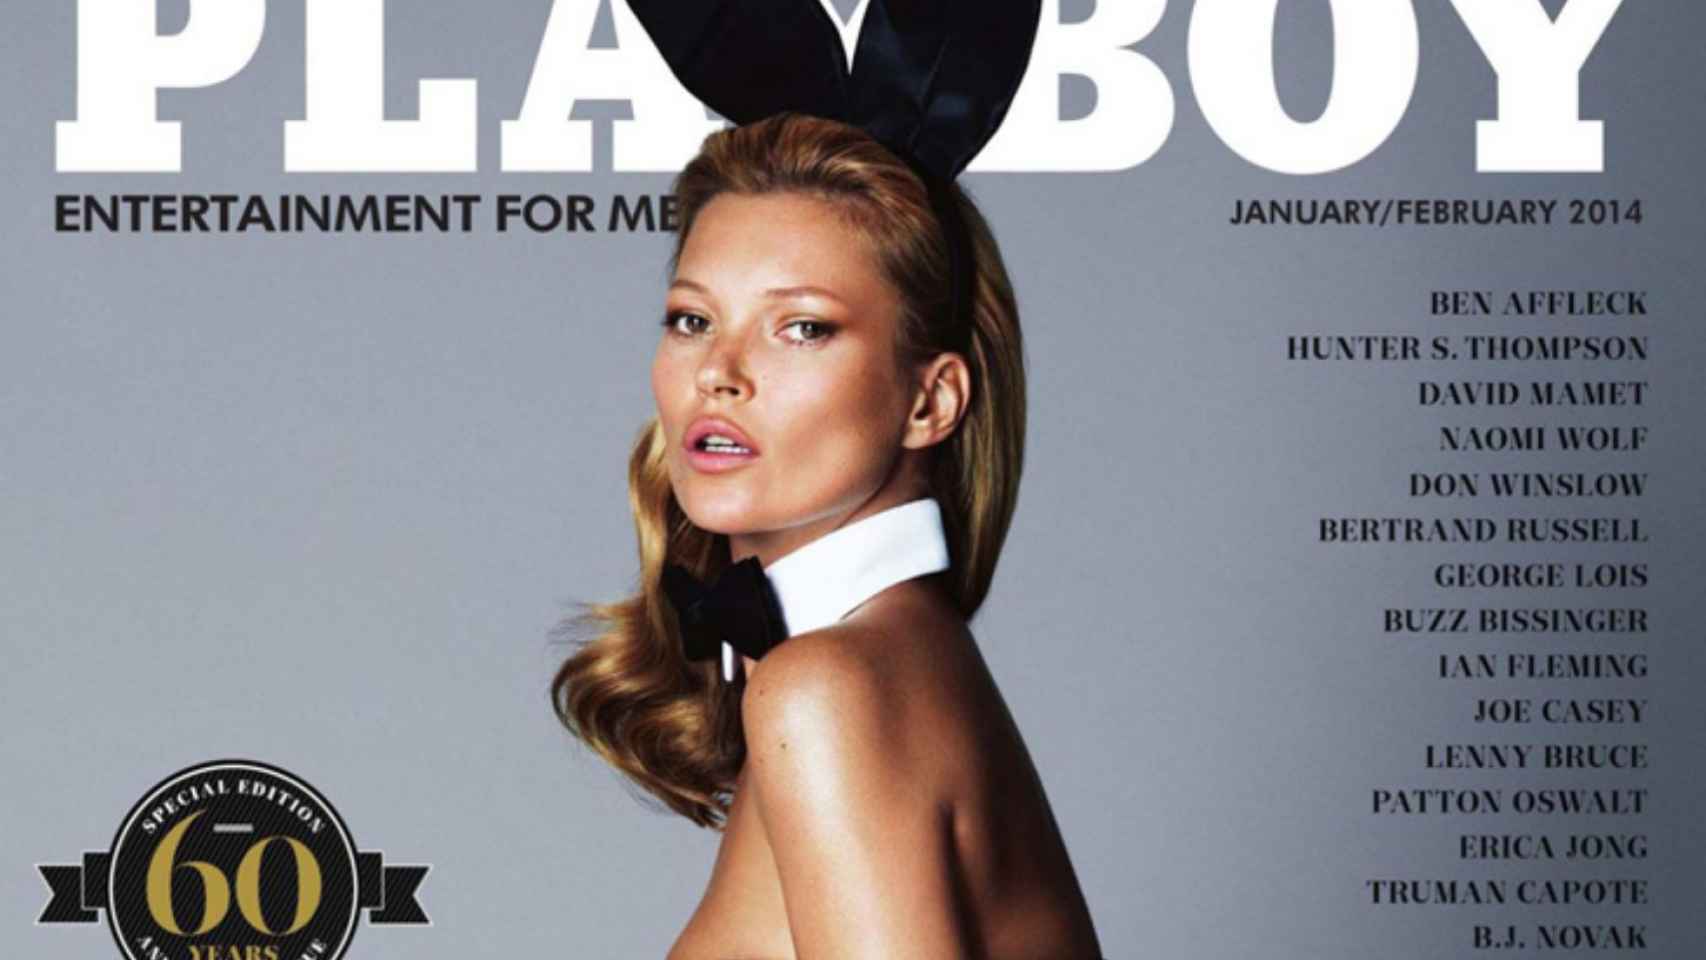 Kate Moss en la portada de Playboy / PLAYBOY